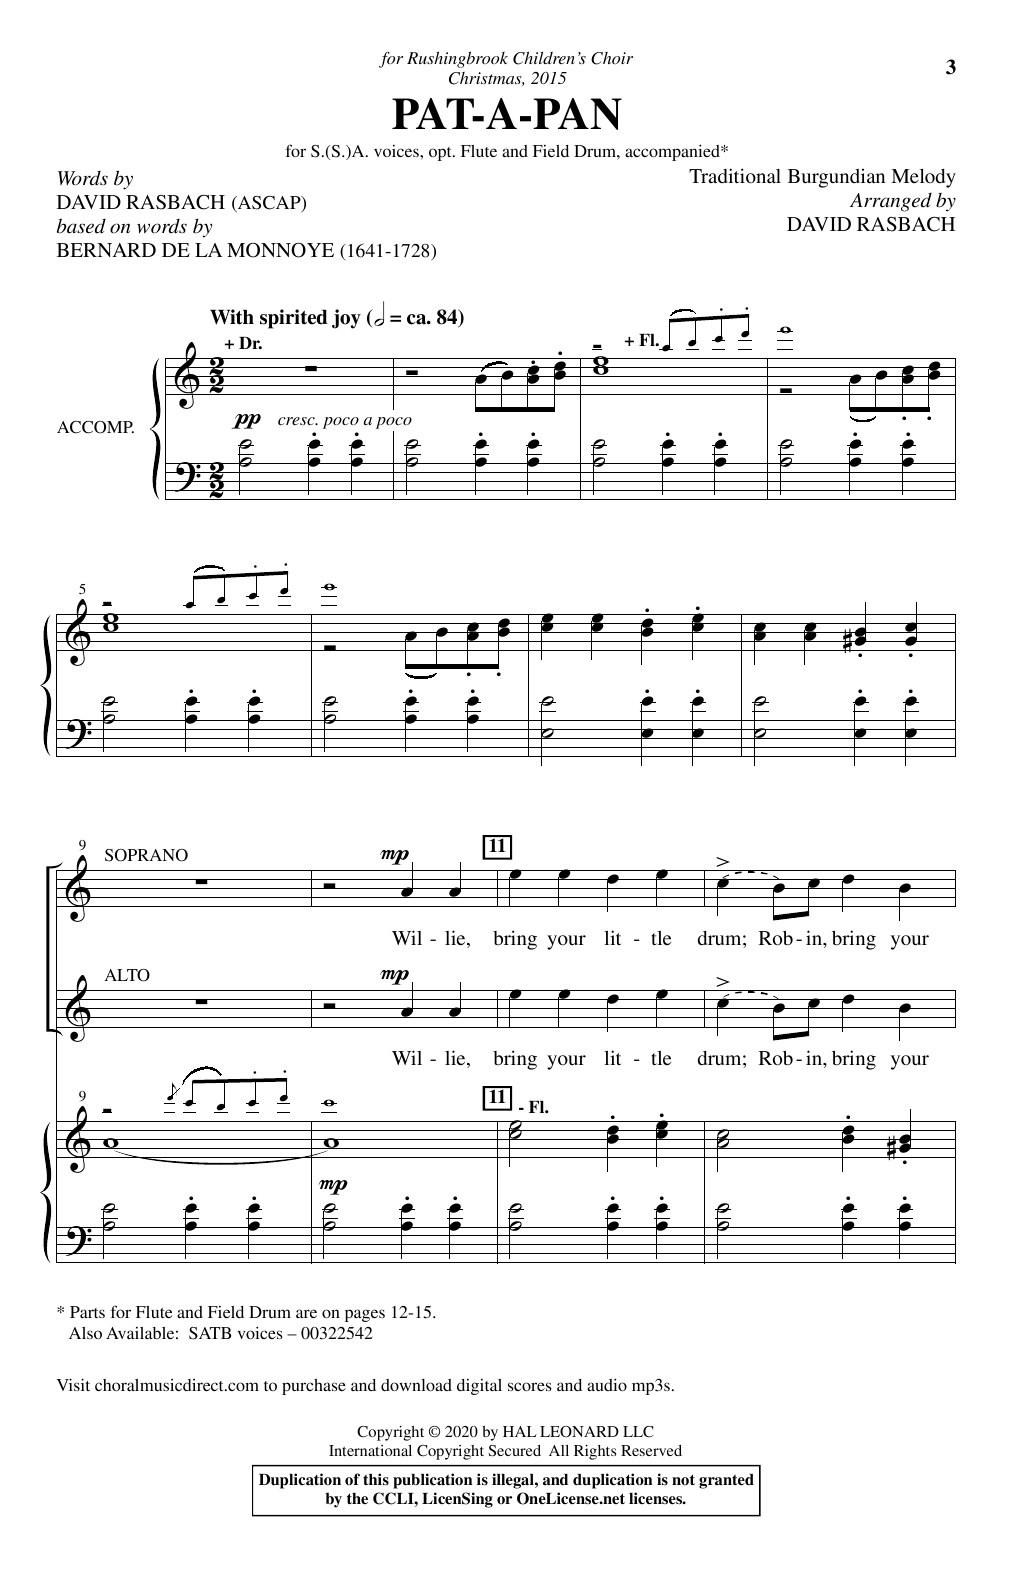 Traditional Burgundian Melody Pat-A-Pan (arr. David Rasbach) sheet music notes and chords arranged for SSA Choir